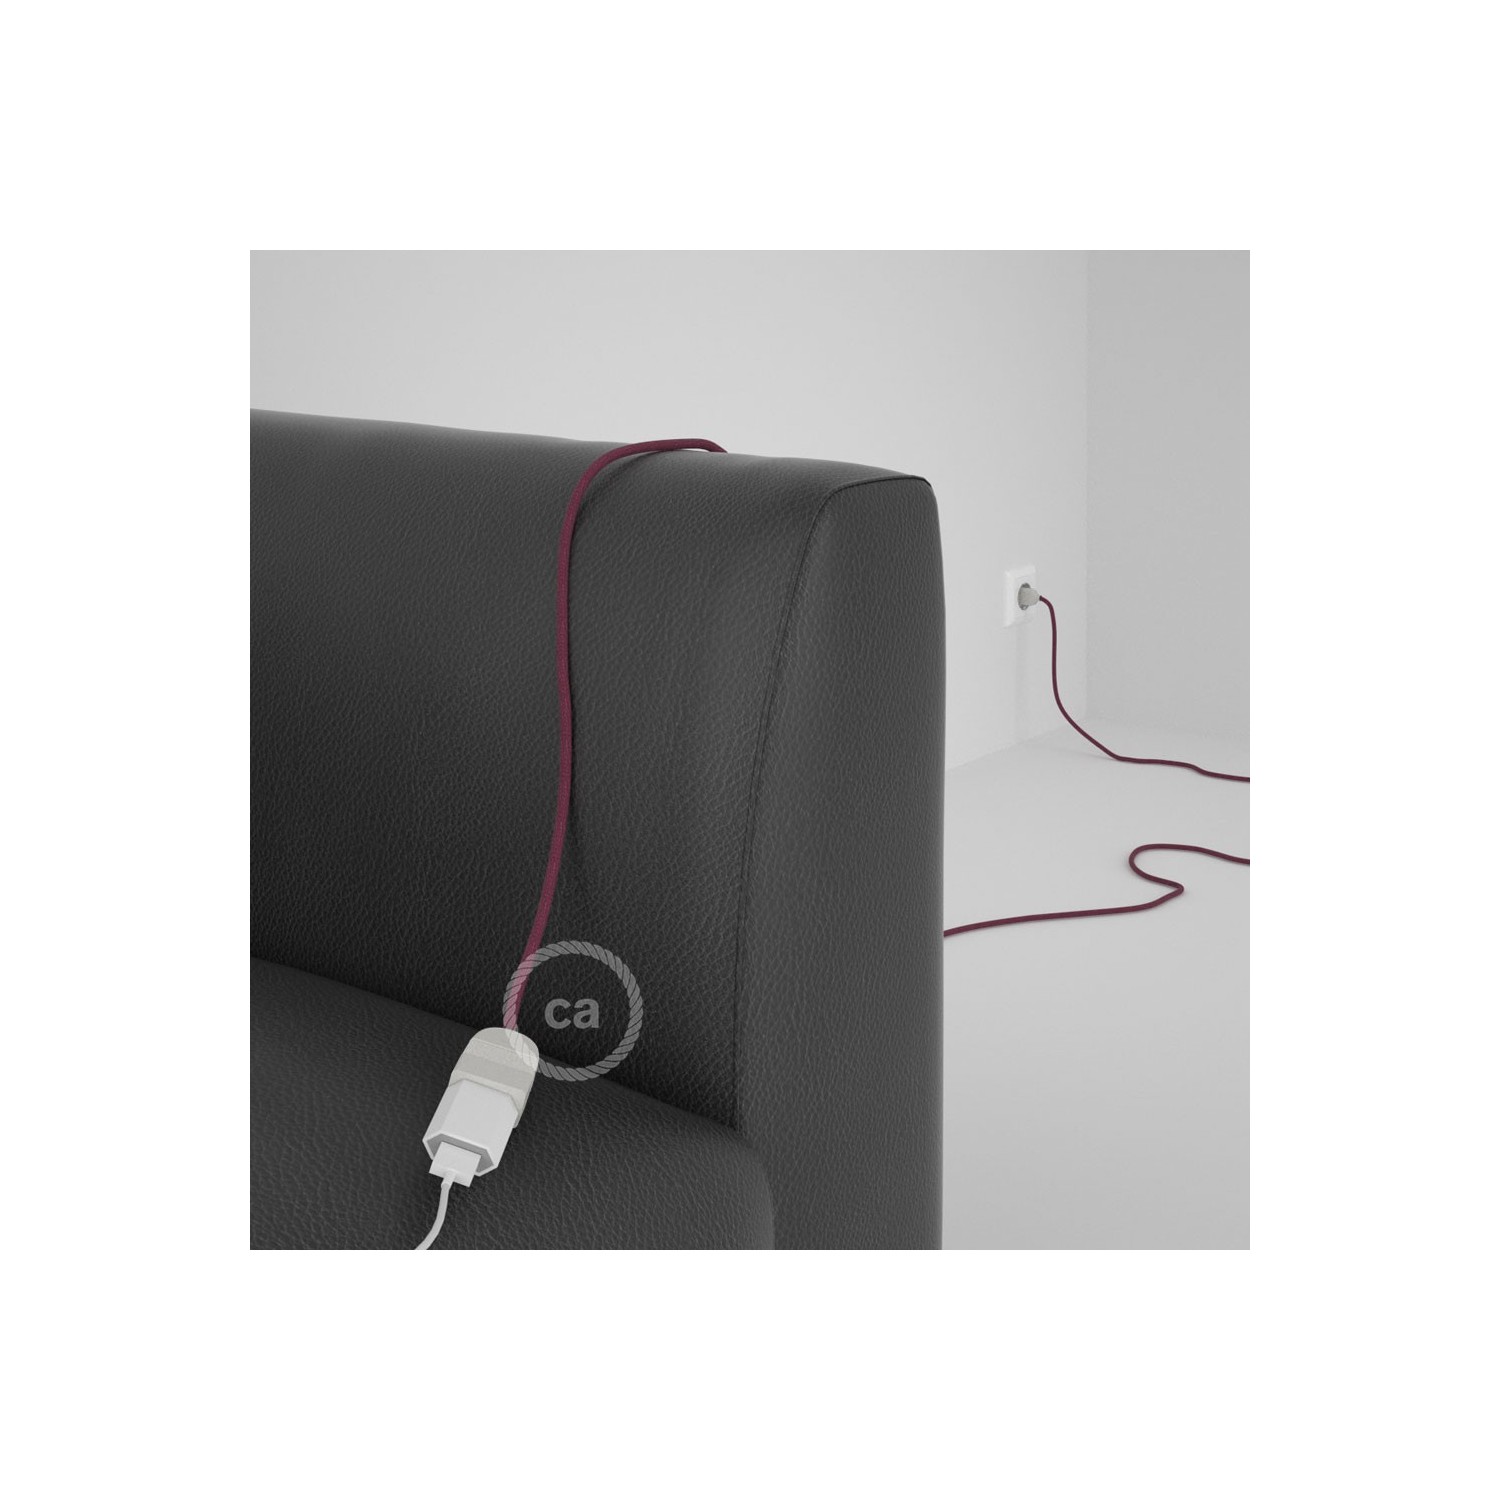 Rallonge électrique avec câble textile RC32 Coton Marc De Raisin 2P 10A Made in Italy.